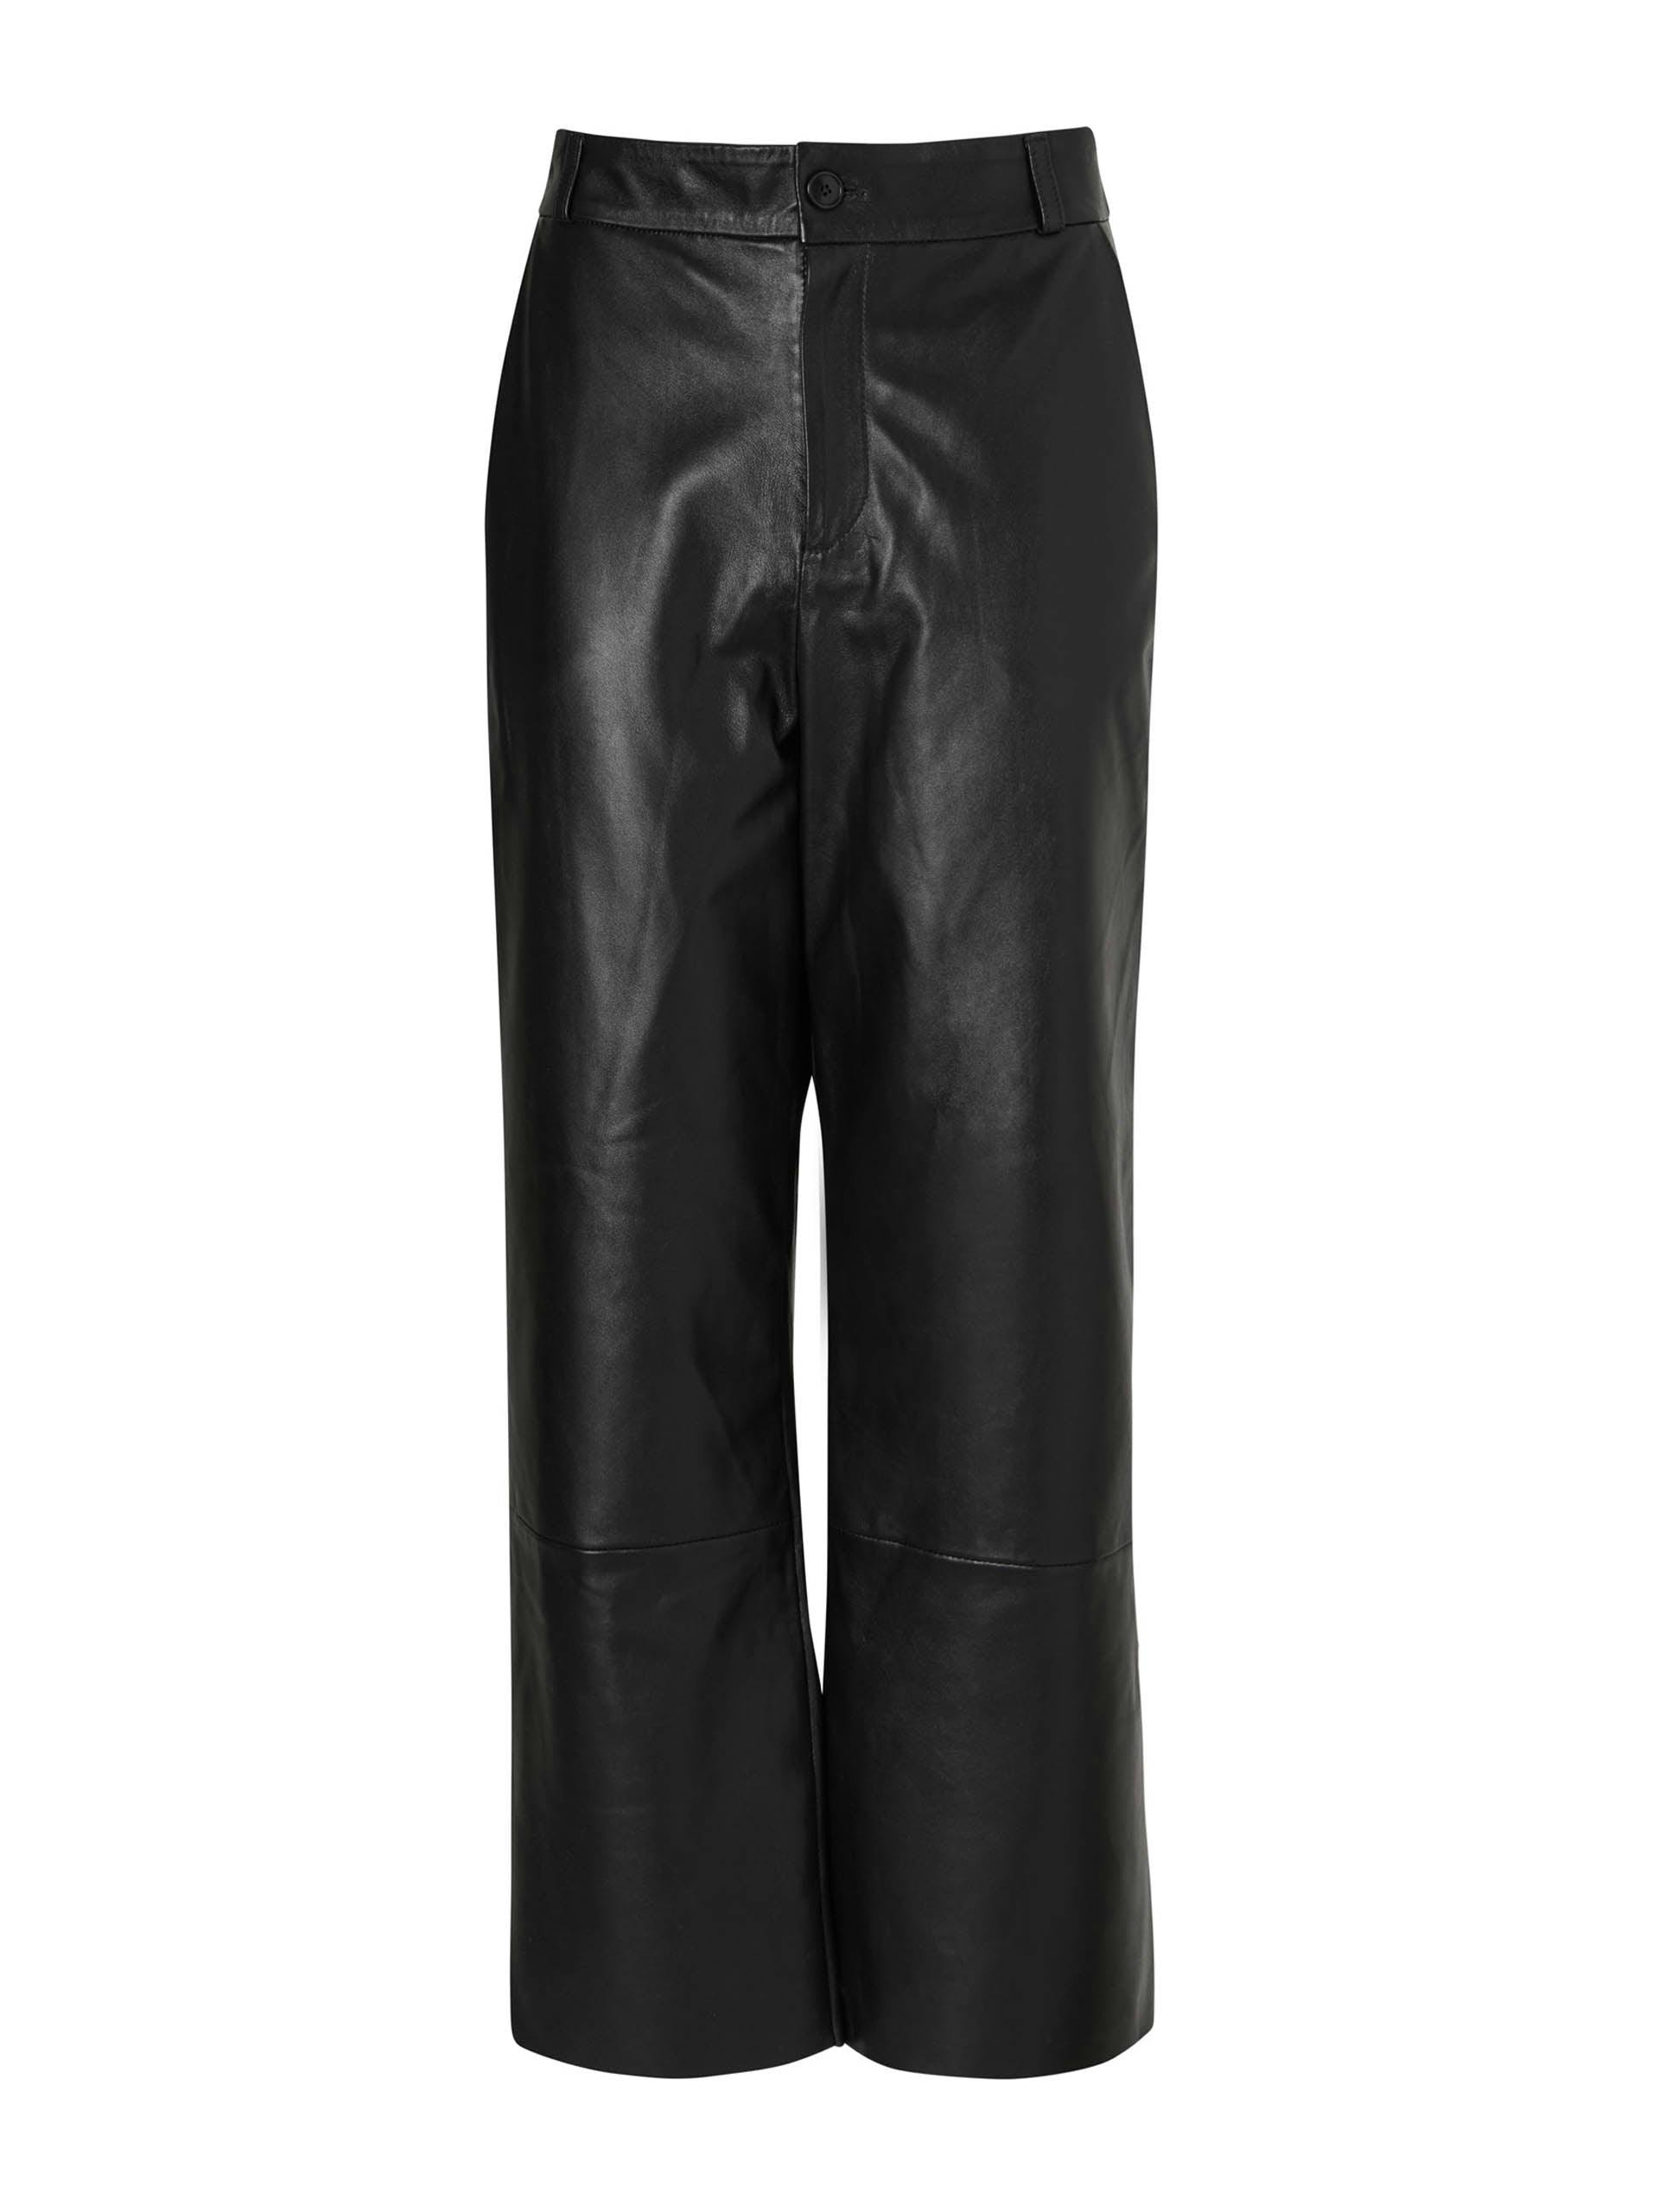 Black leather Sacha trousers